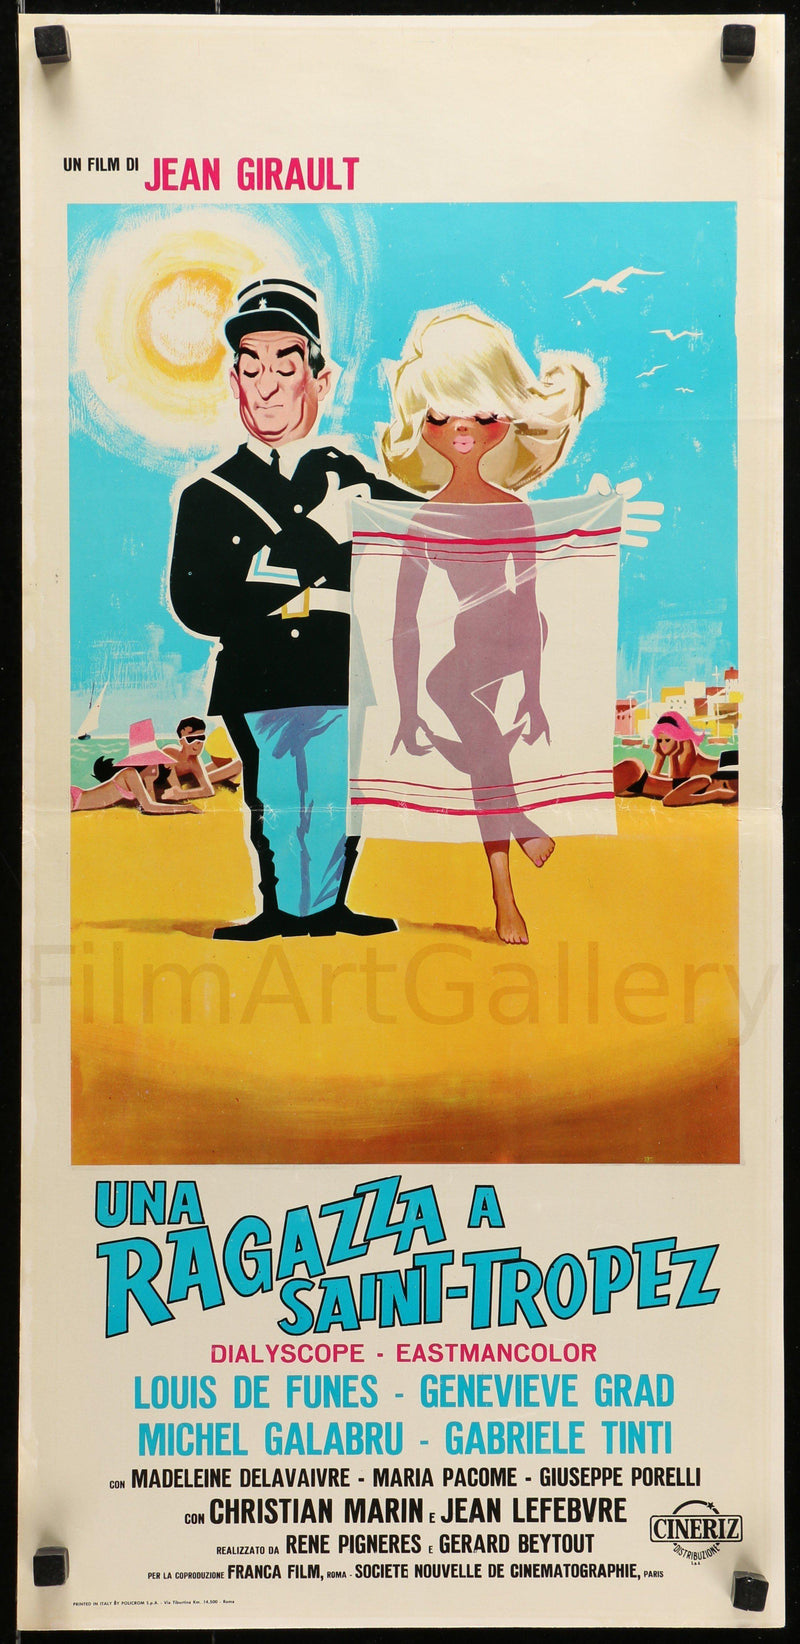 The Troops of St. Tropez (Le Gendarme De...) Italian Locandina (13x28) Original Vintage Movie Poster